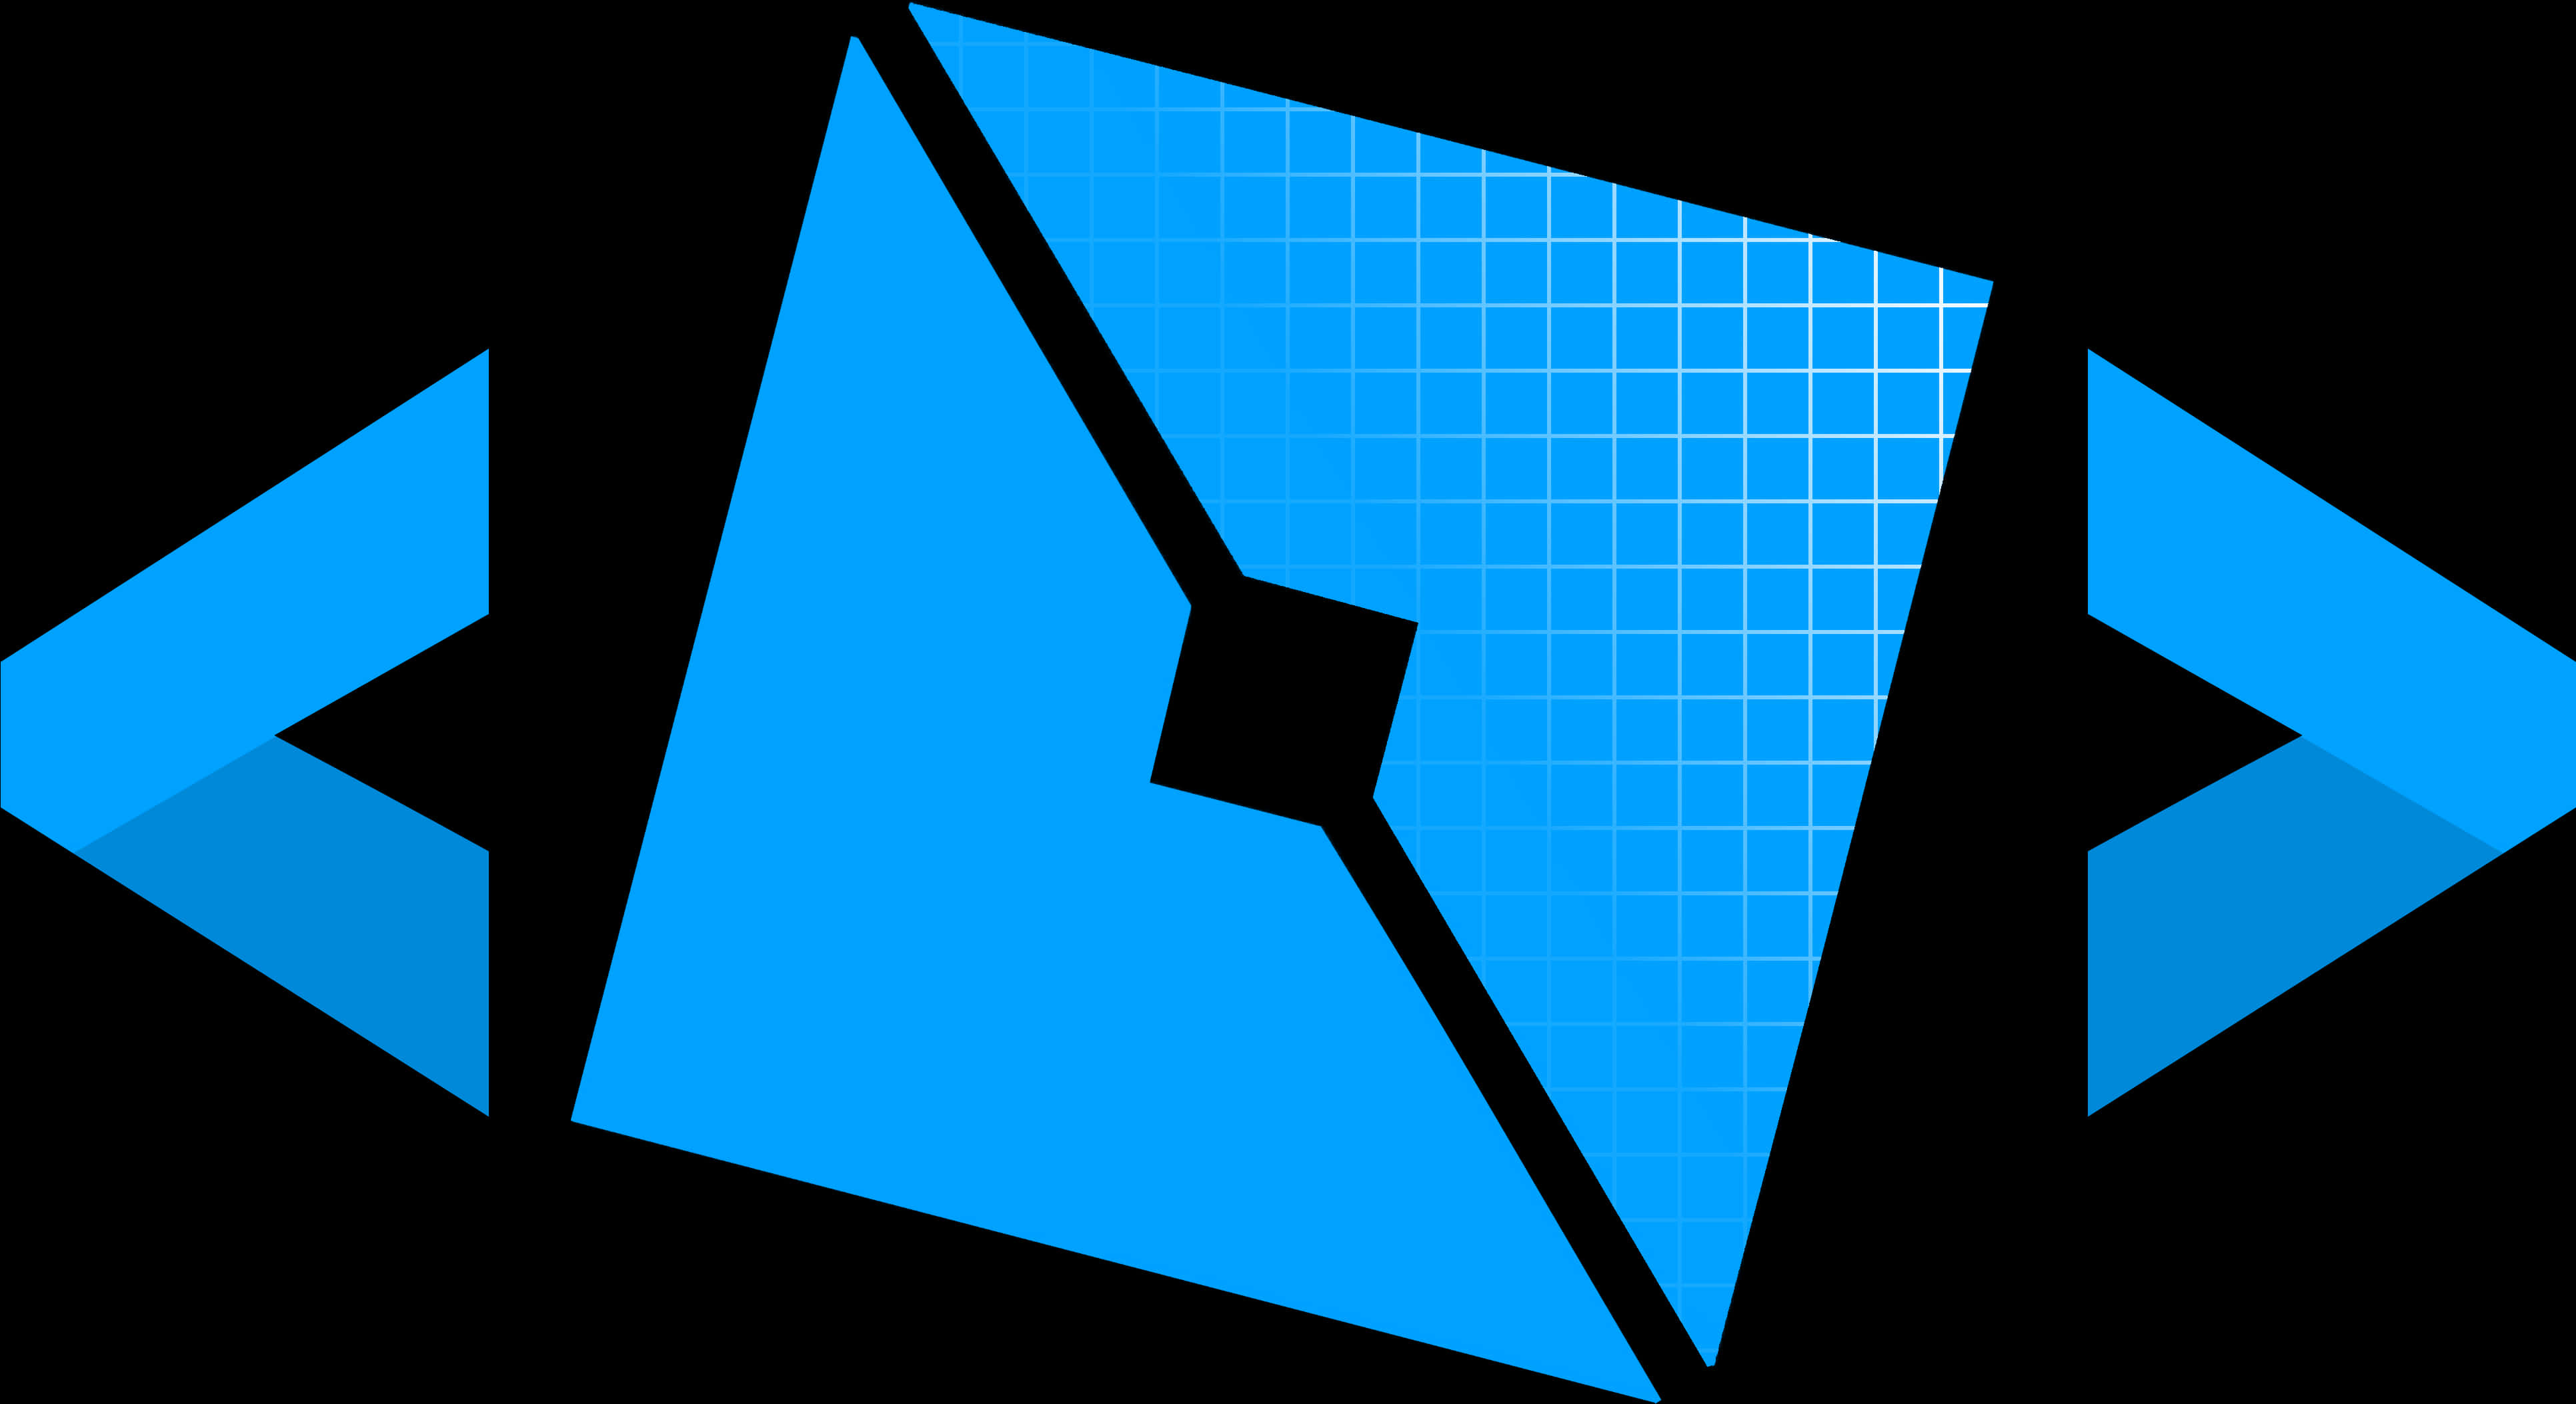 Roblox Logo Blue Grid Design PNG image